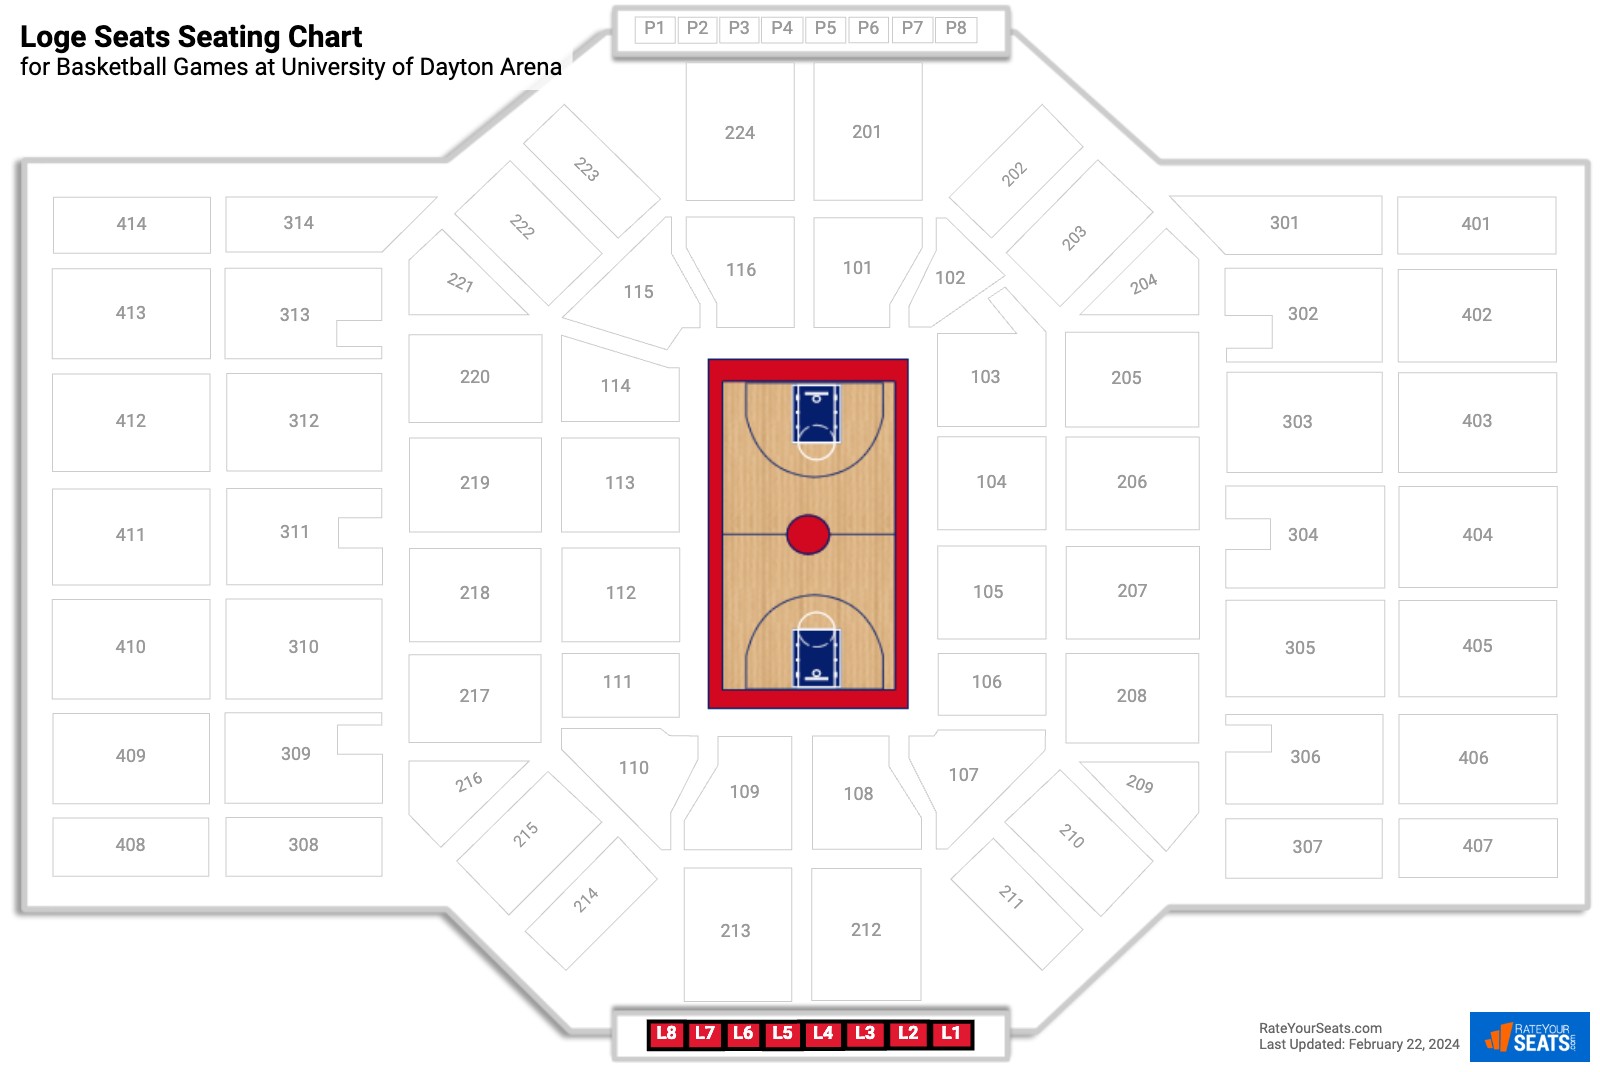 Basketball Loge Seats Seating Chart at University of Dayton Arena